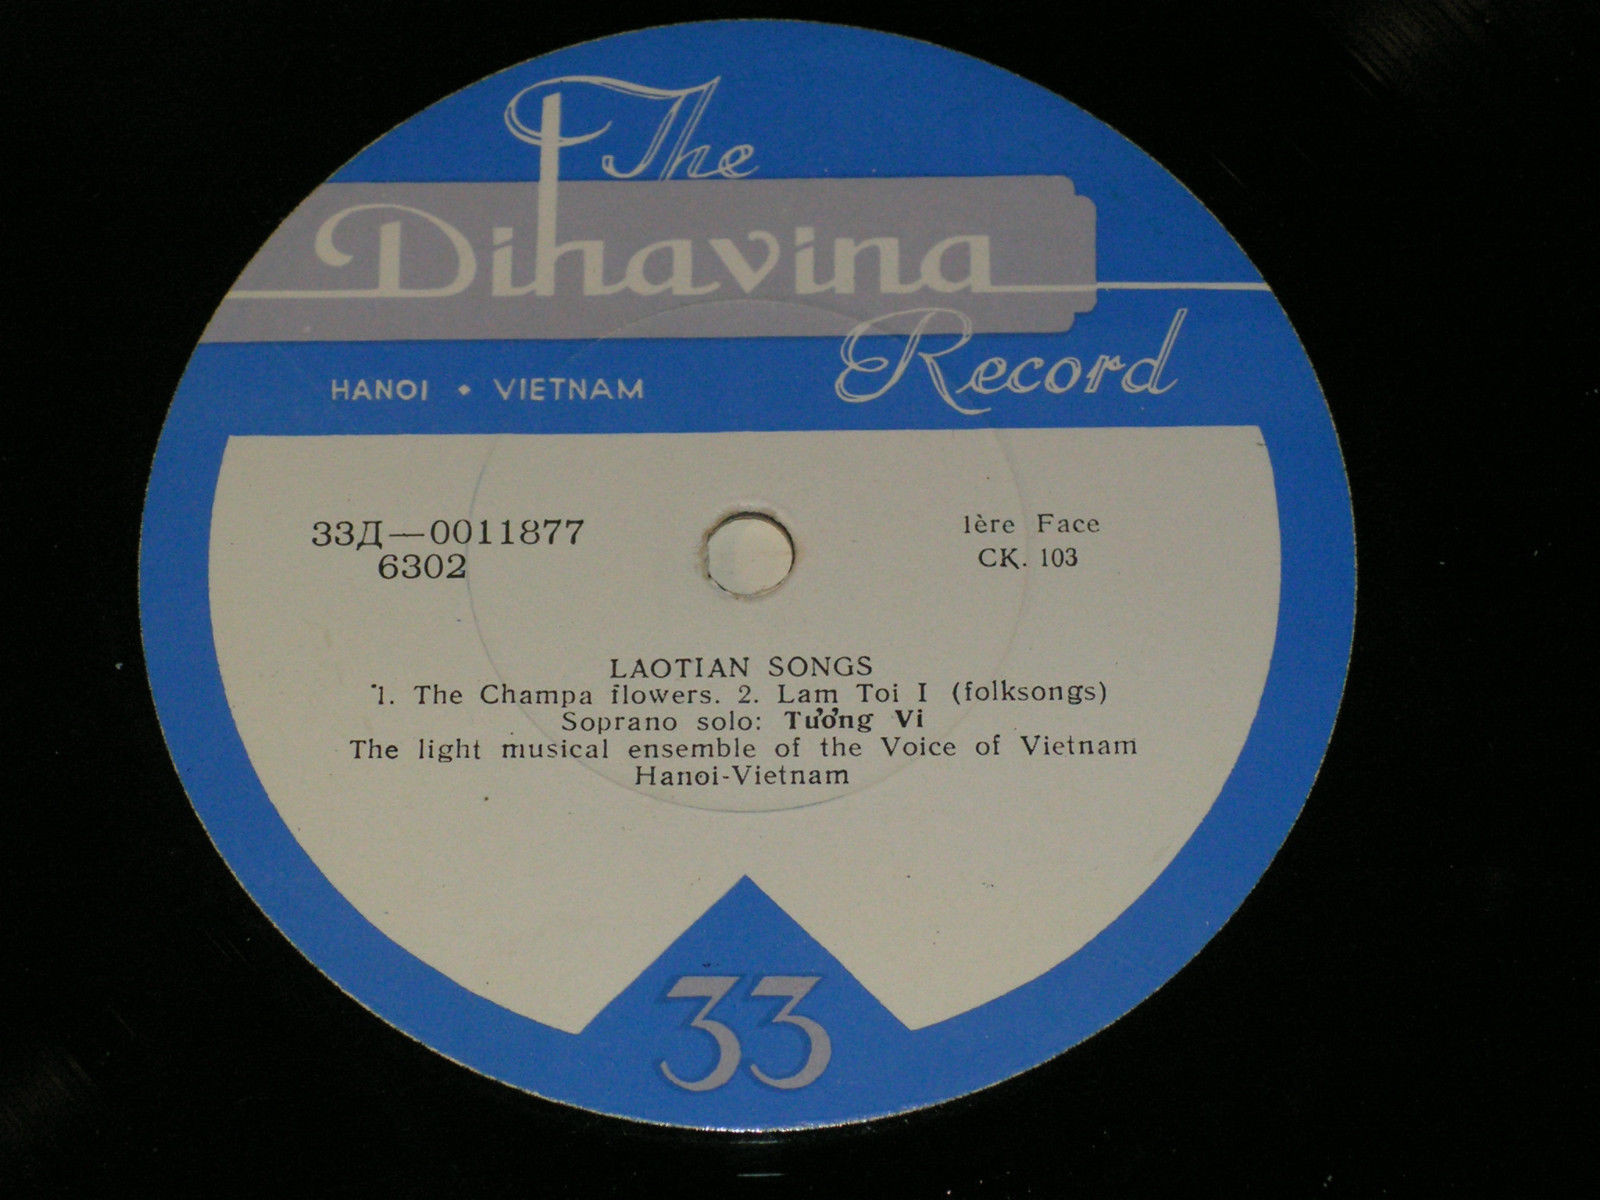 Laotian Songs [по заказу вьетнамской фирмы DIHAVINA 6302]